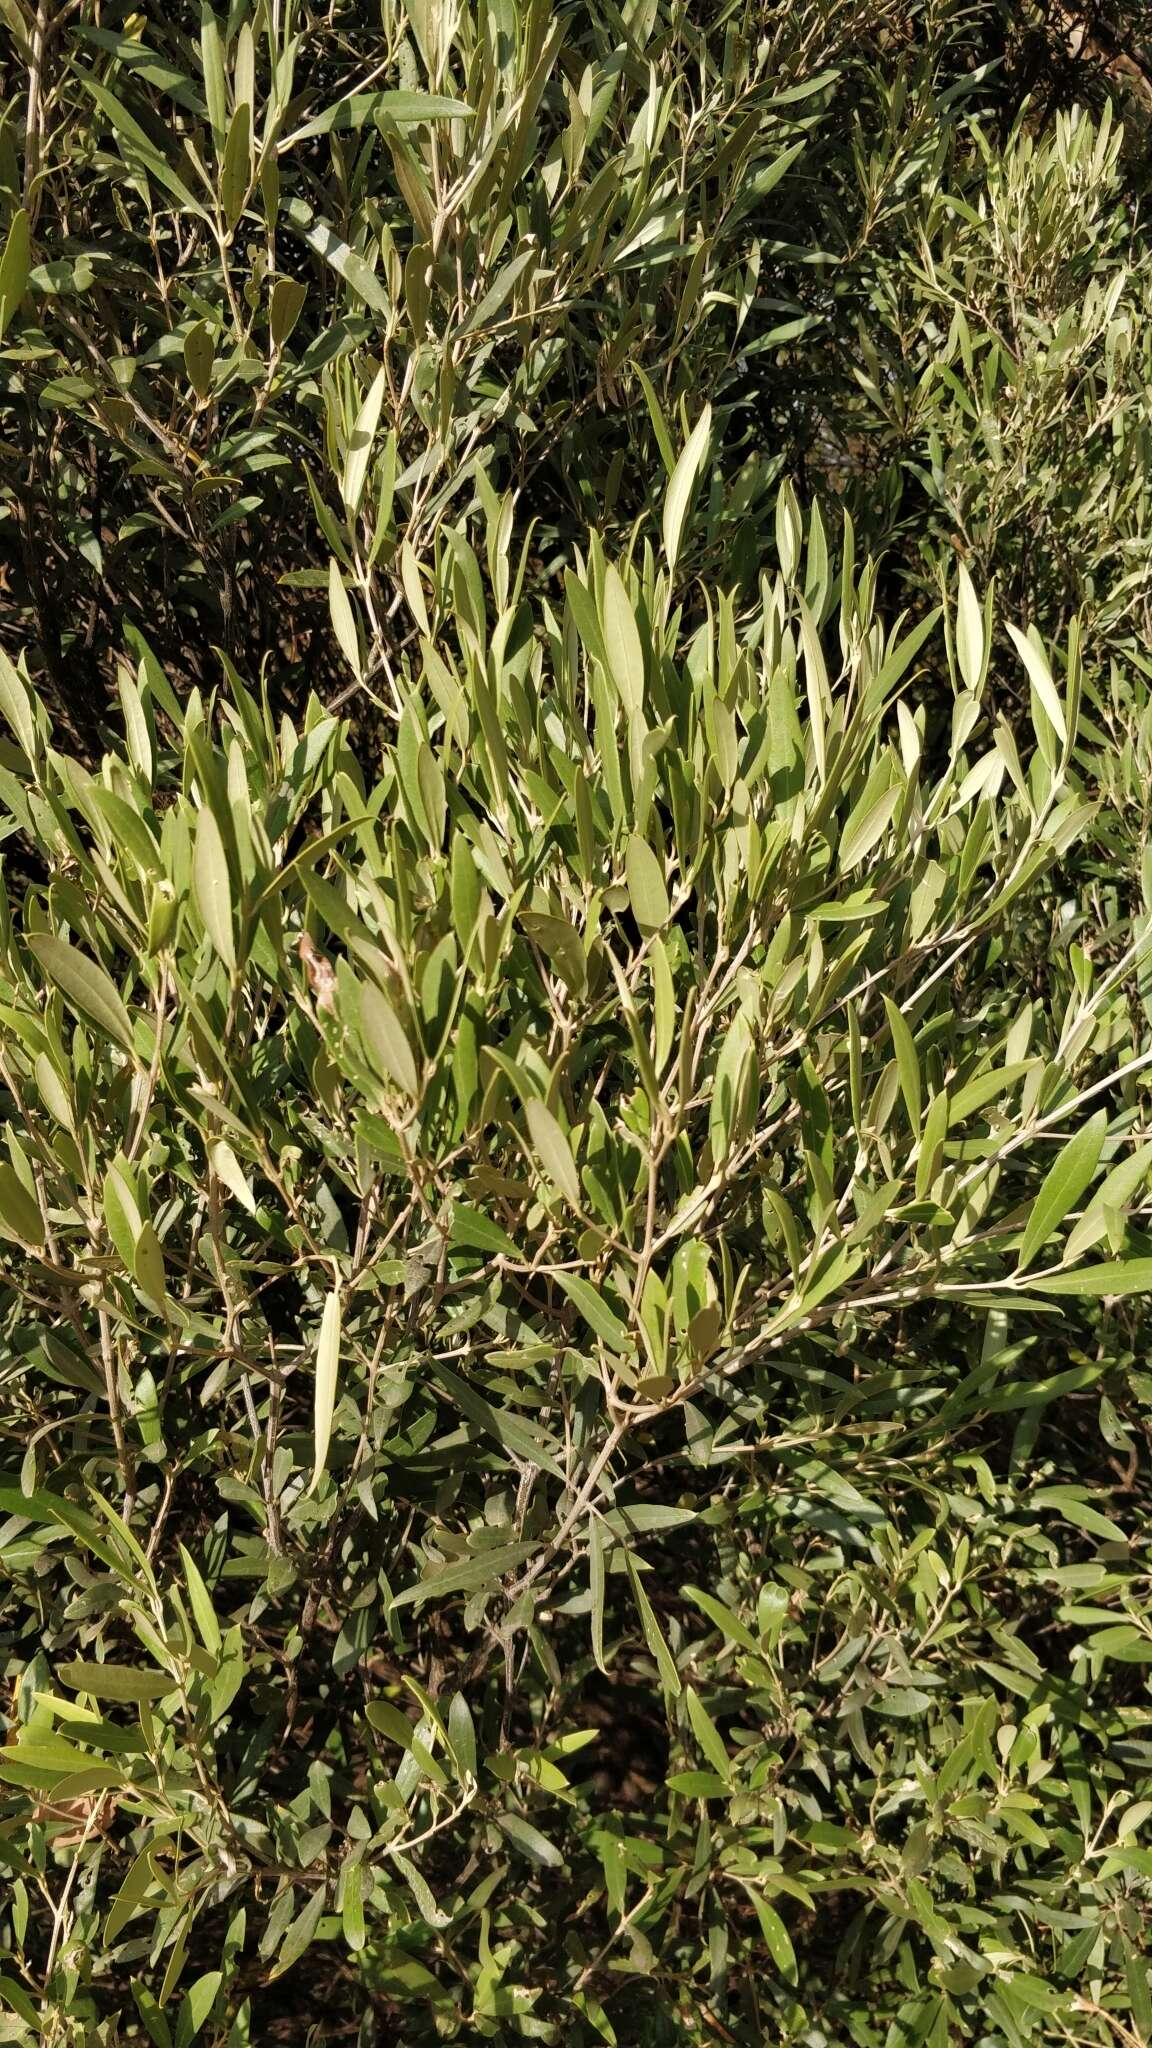 Image de Olea europaea subsp. cerasiformis G. Kunkel & Sunding